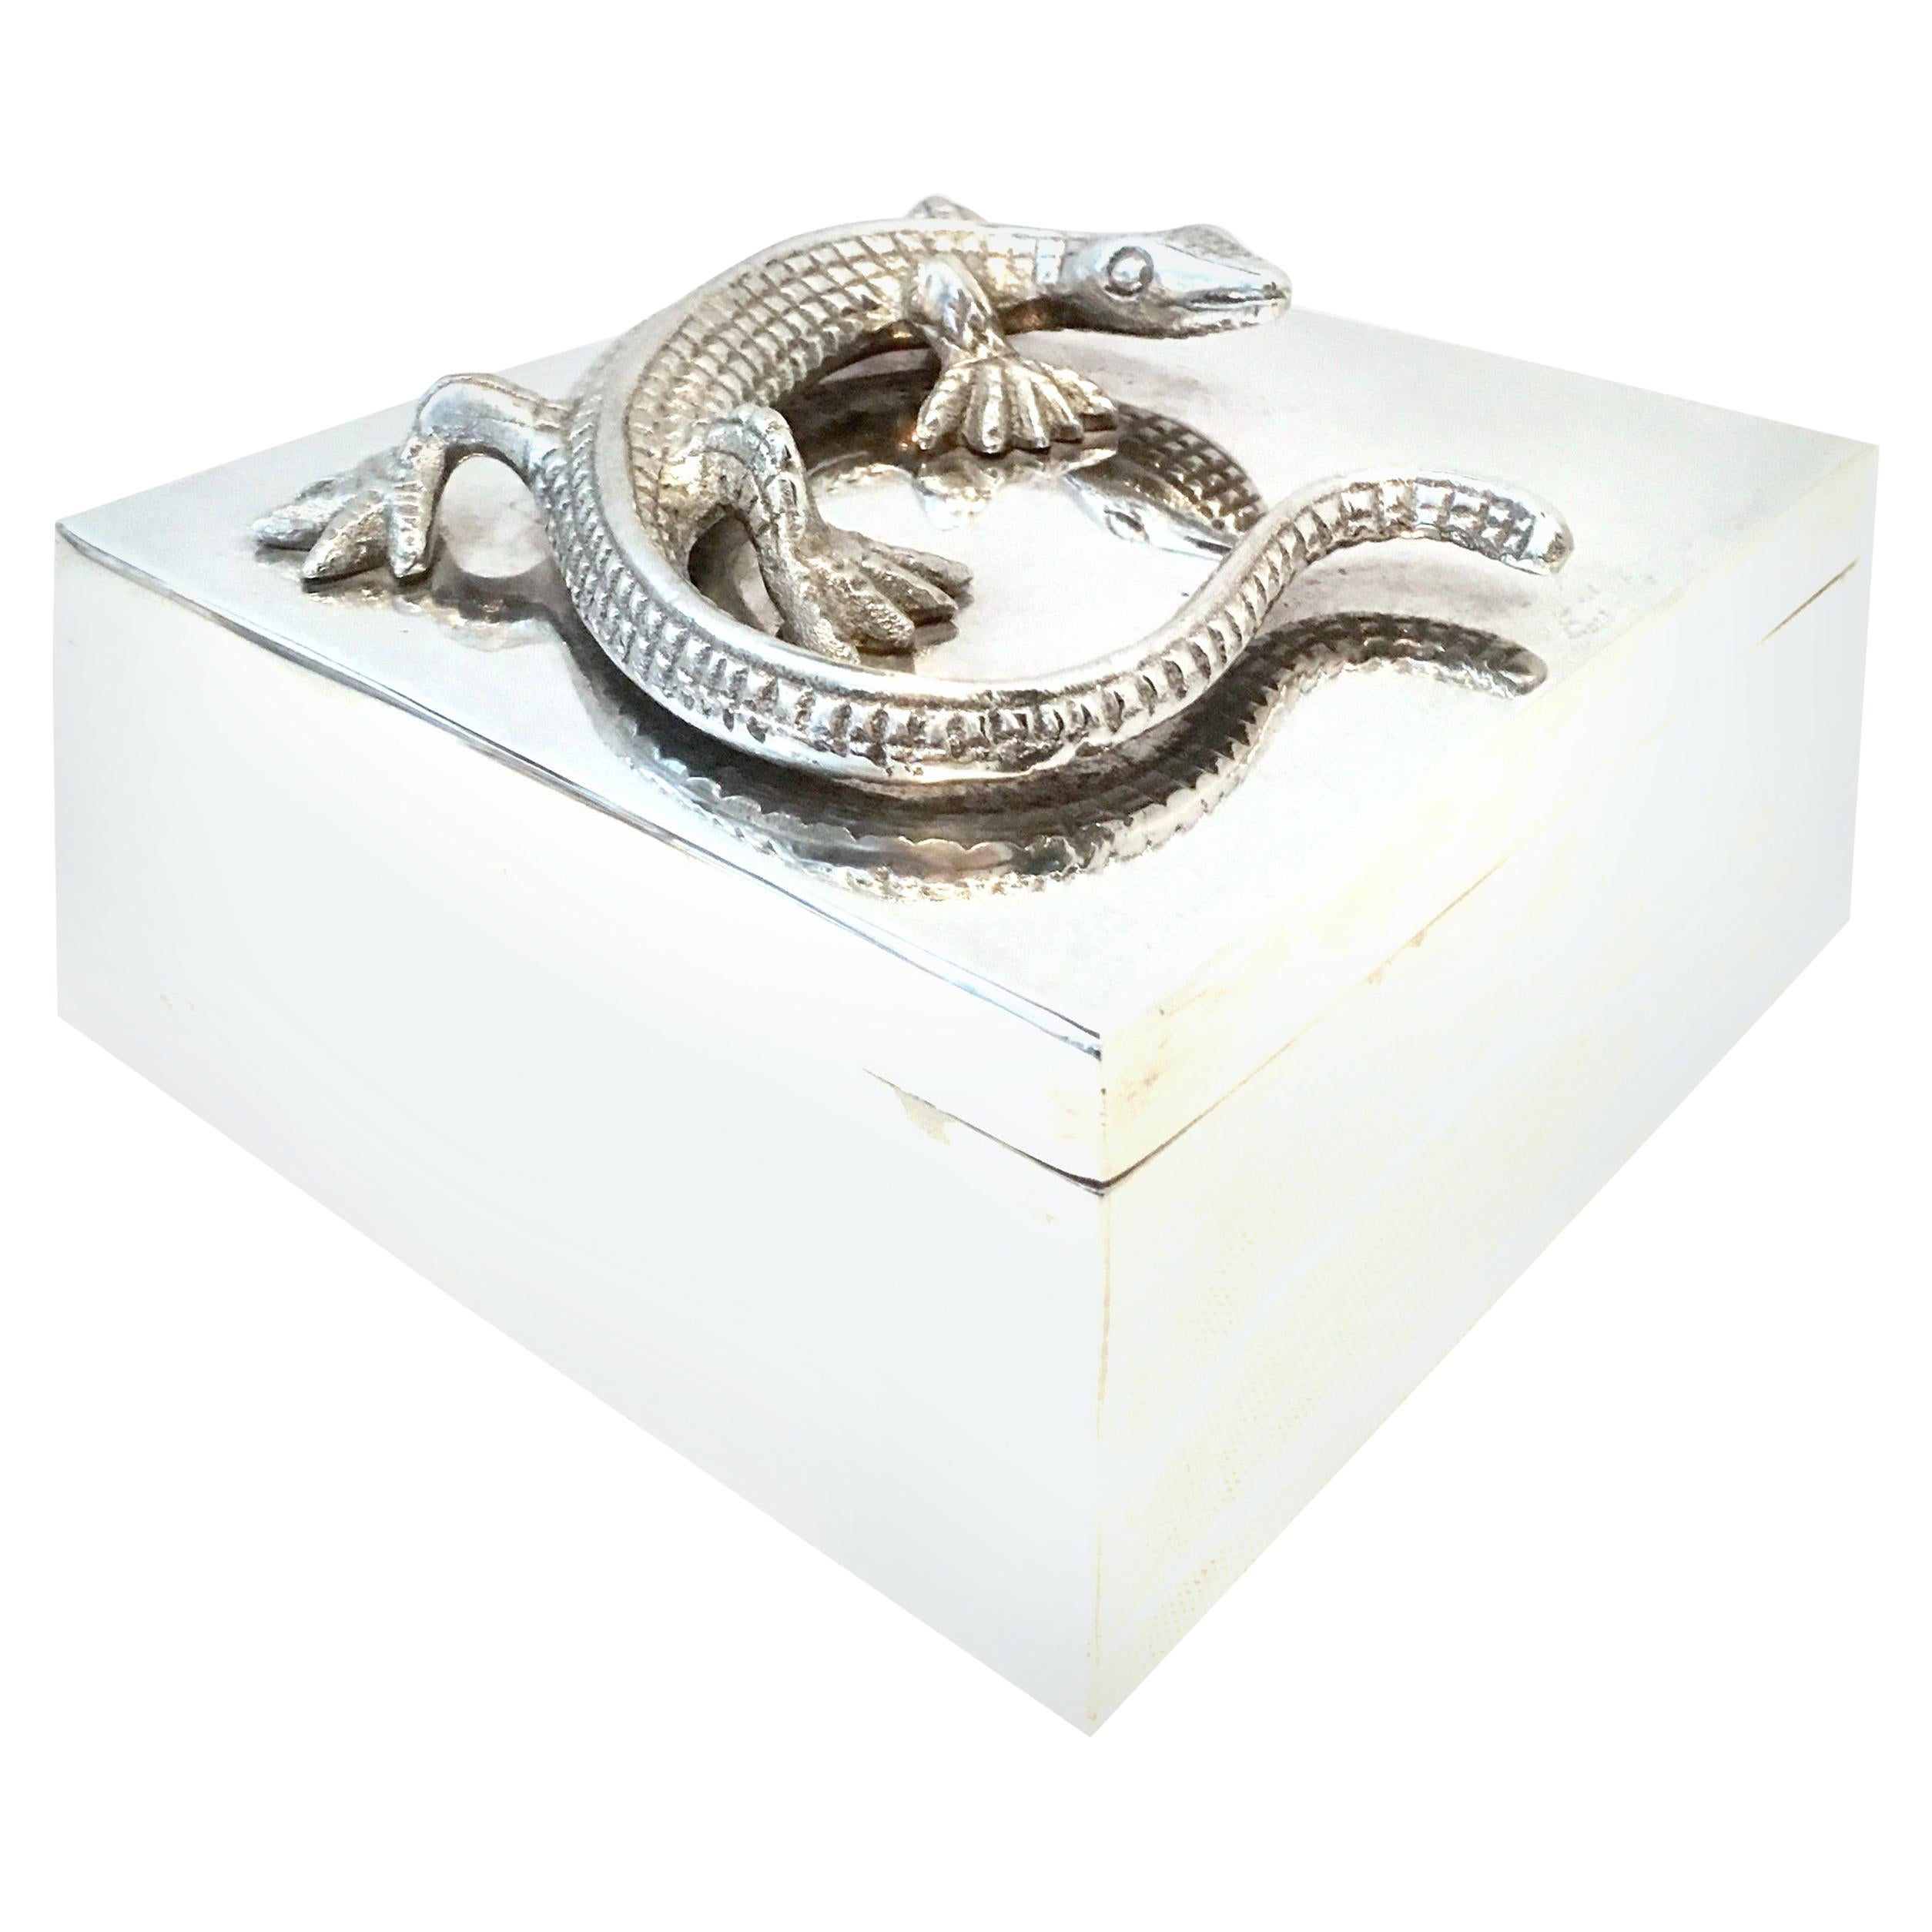 21st Century Silver Plate Sculptural "Lizard" Lidded Box For Sale